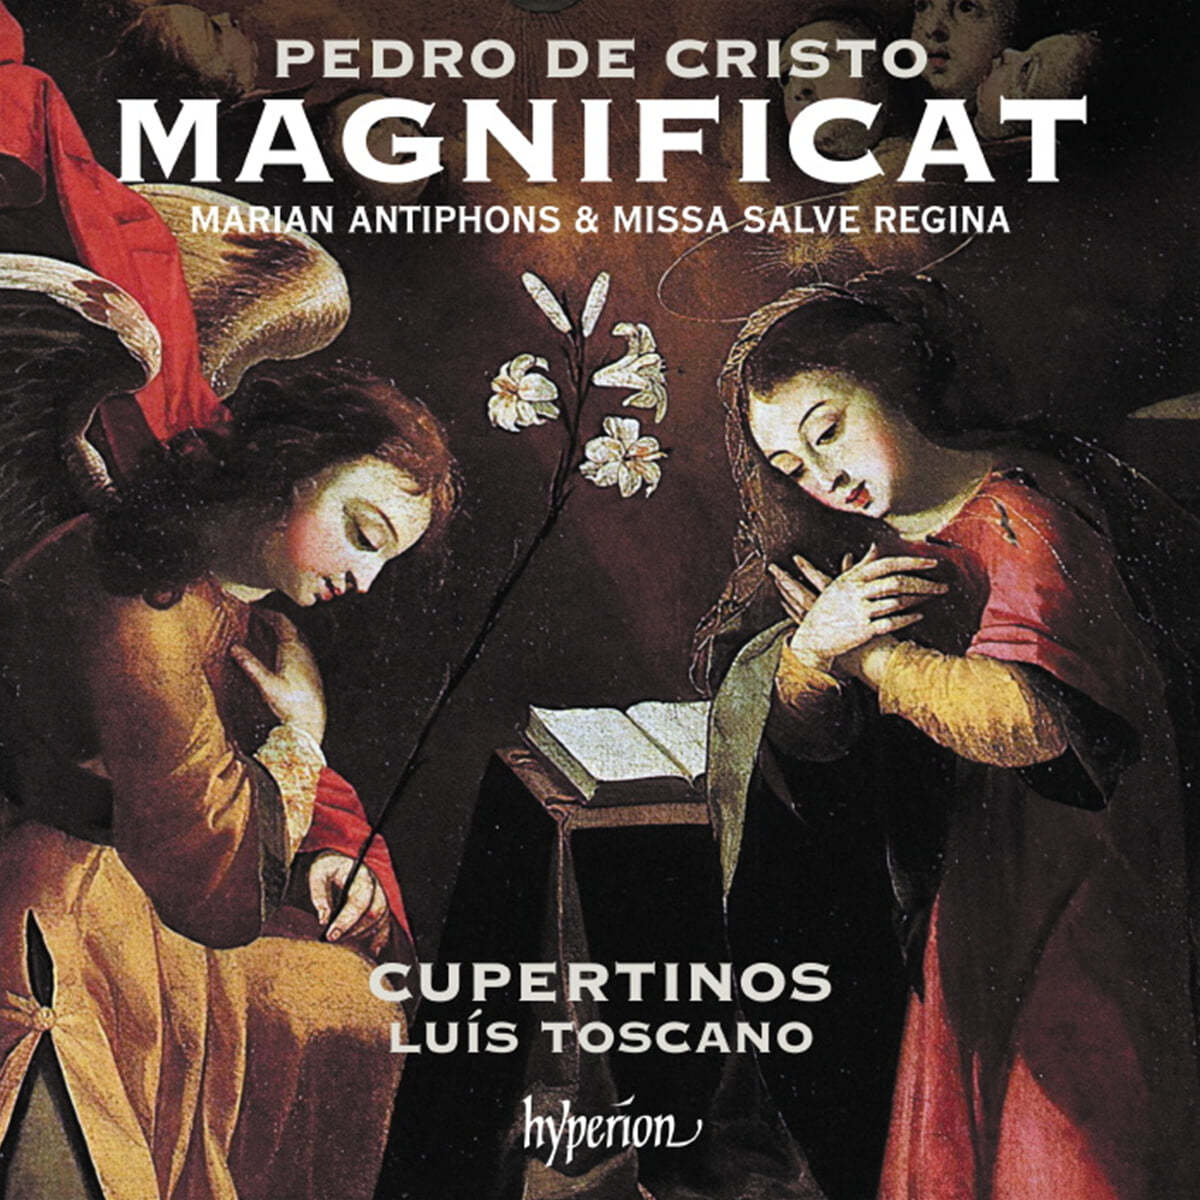 Luis Toscano 페드로 데 크리스토: 마니피카트 (Pedro De Cristo: Magnificat, Marian Antiphons & Missa Salve Regina)